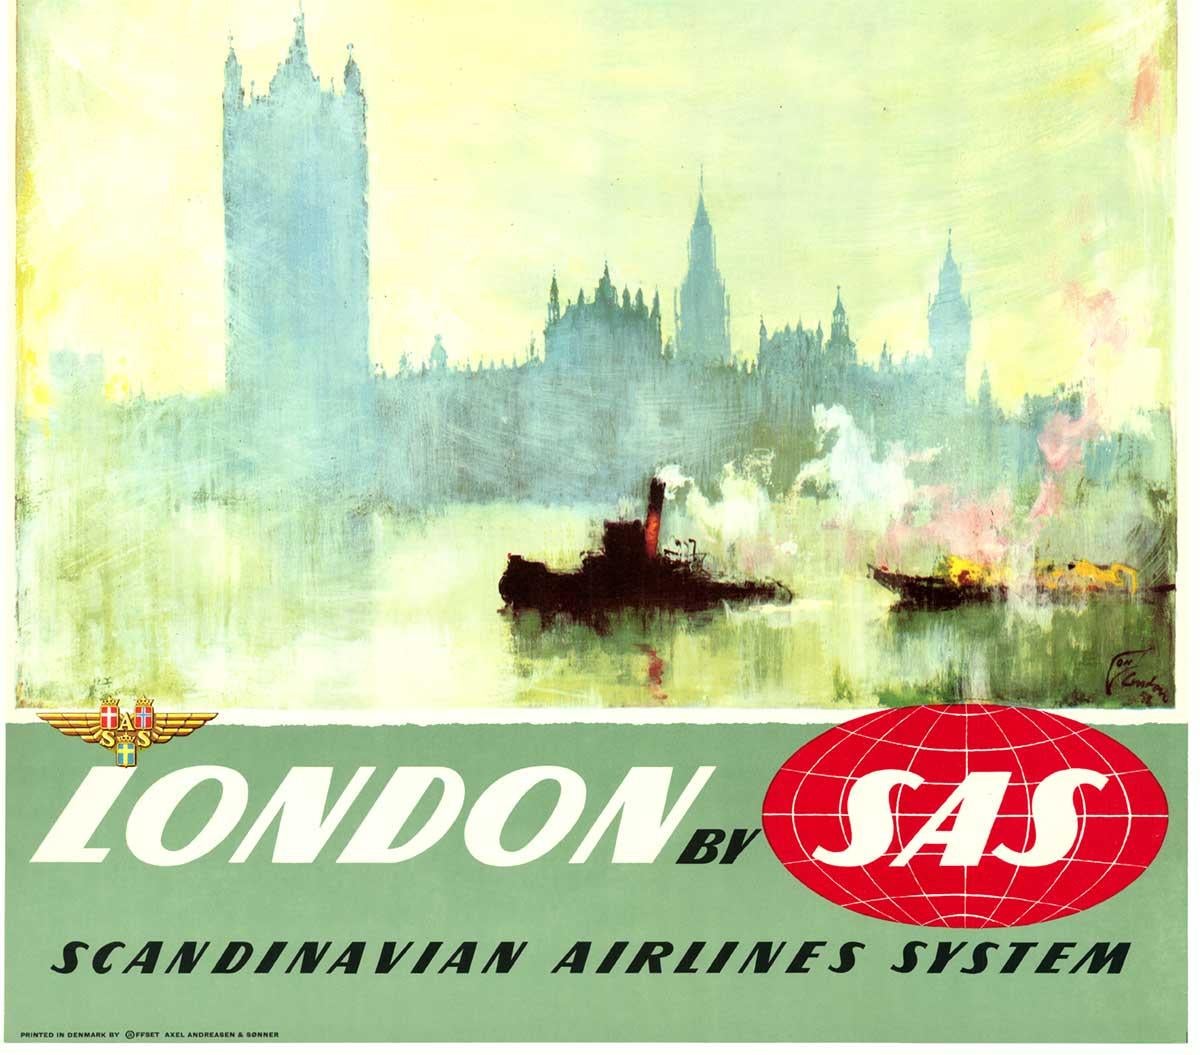 Original London SAS Scandinavian Airlines vintage poster, 1st printing  - Print by Otto Nielsen